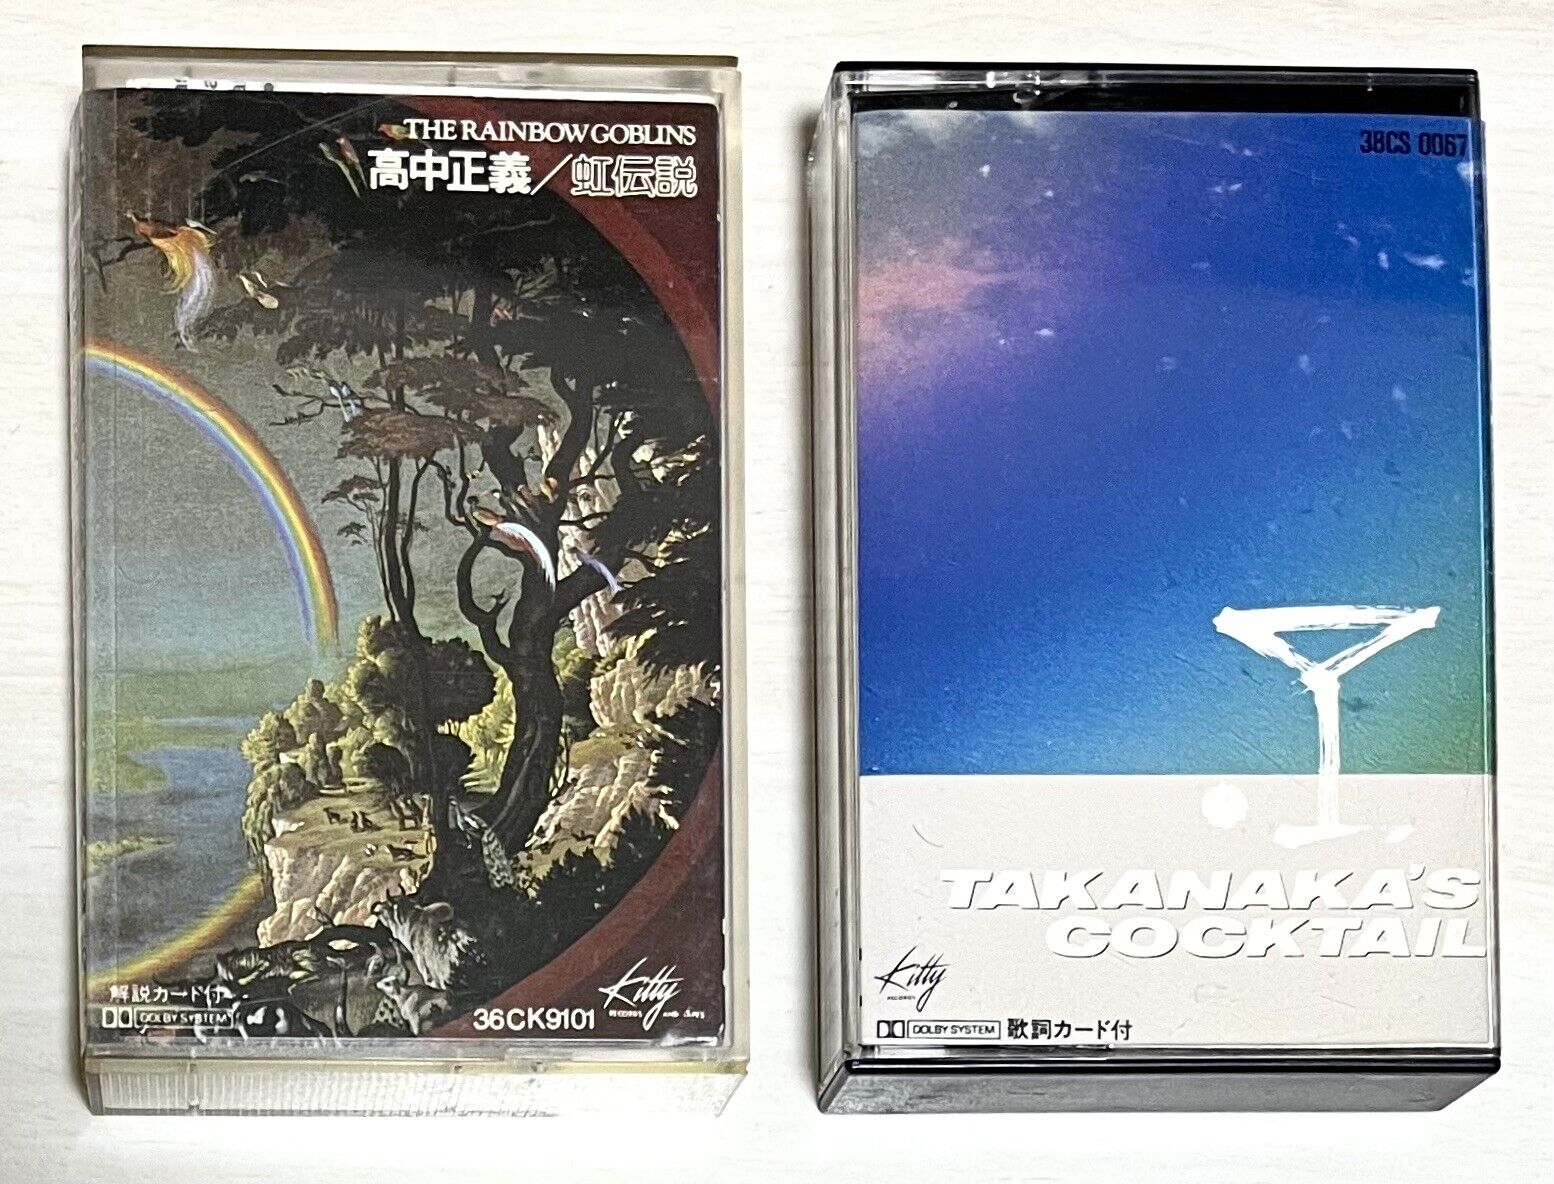 MASAYOSHI TAKANAKA 2 Japan Cassette Tape RAINBOW GOBLINS/TAKANAKA COCKTAIL